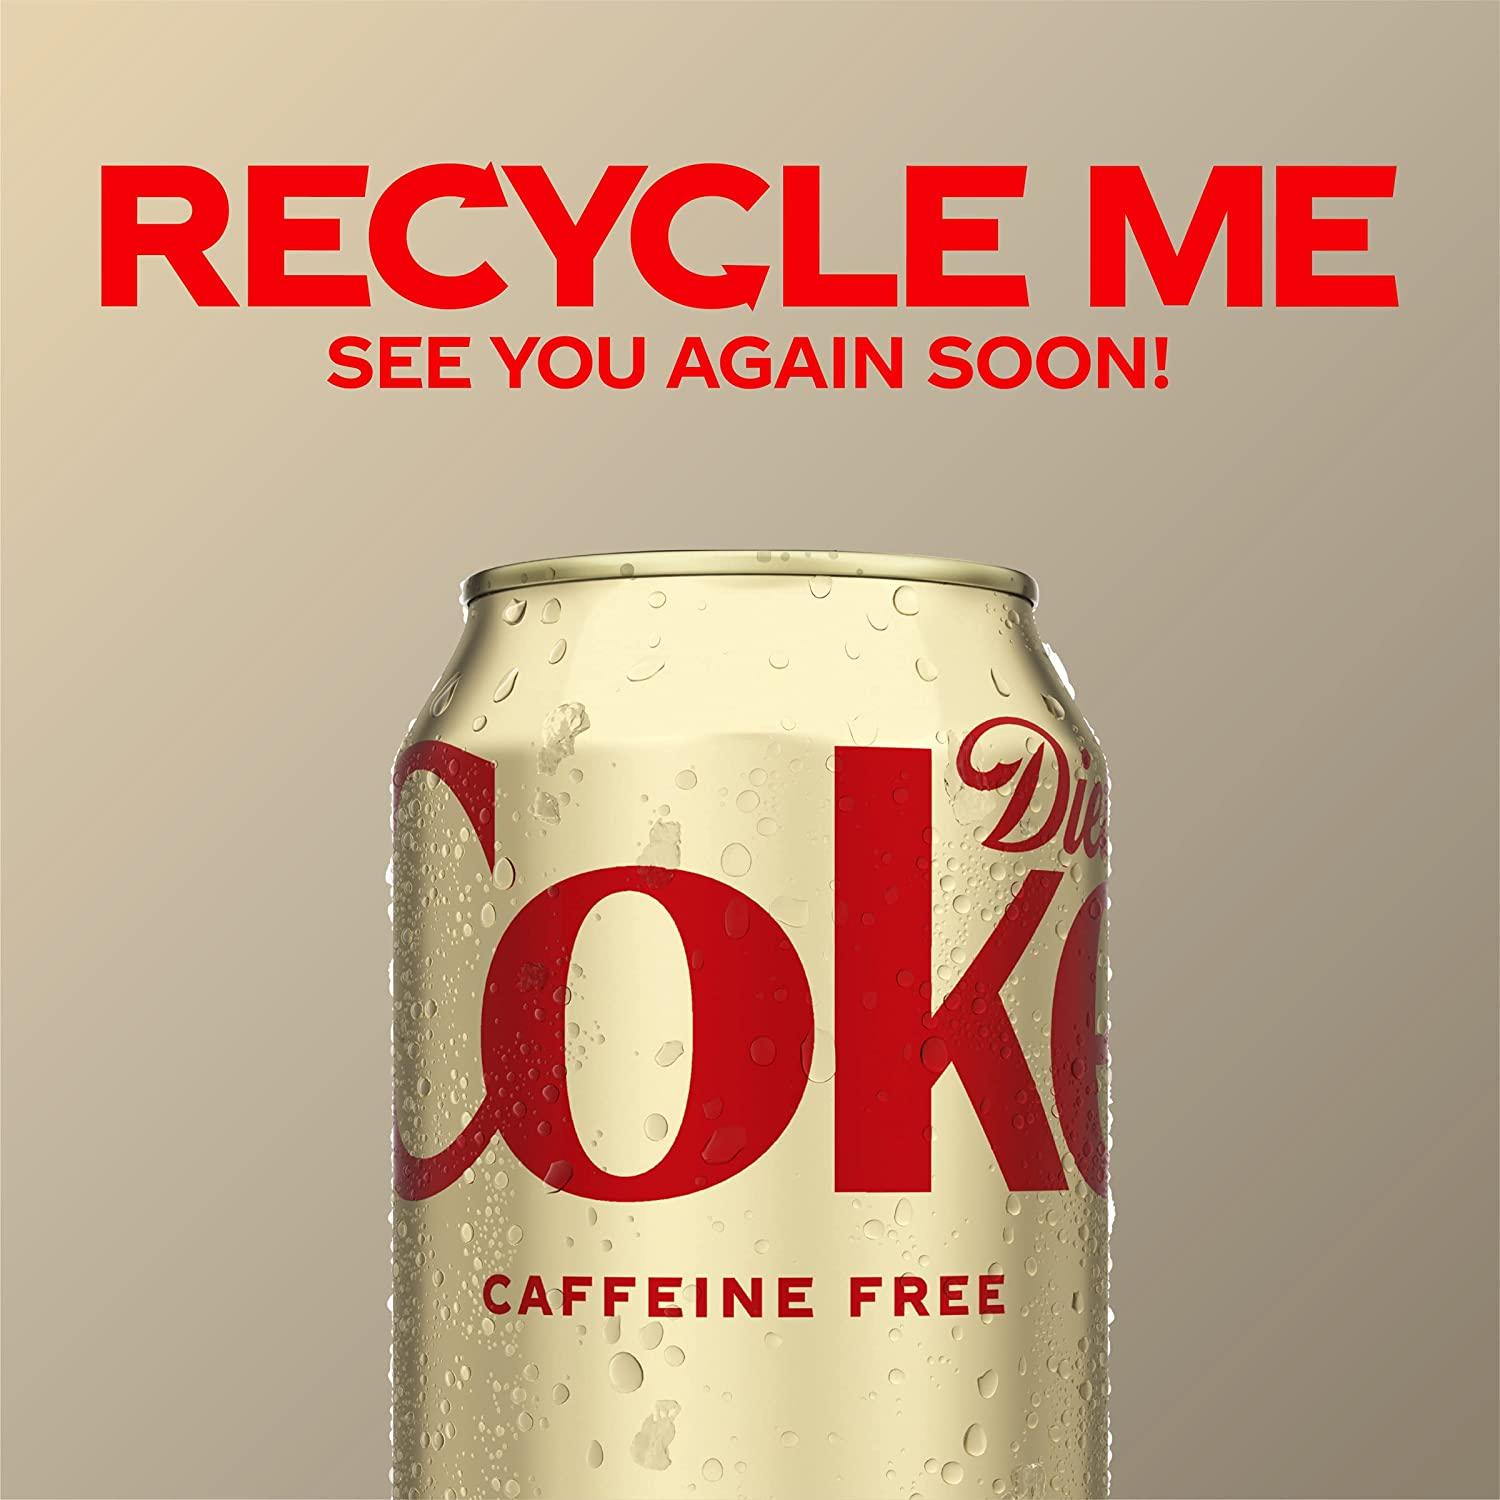 Diet Coke Caffeine-Free Fridge Pack Cans, 12 fl oz, 12 Pack, 3 Sets Caffeine Free Diet Coke 12 Fl Oz (Pack of 36)